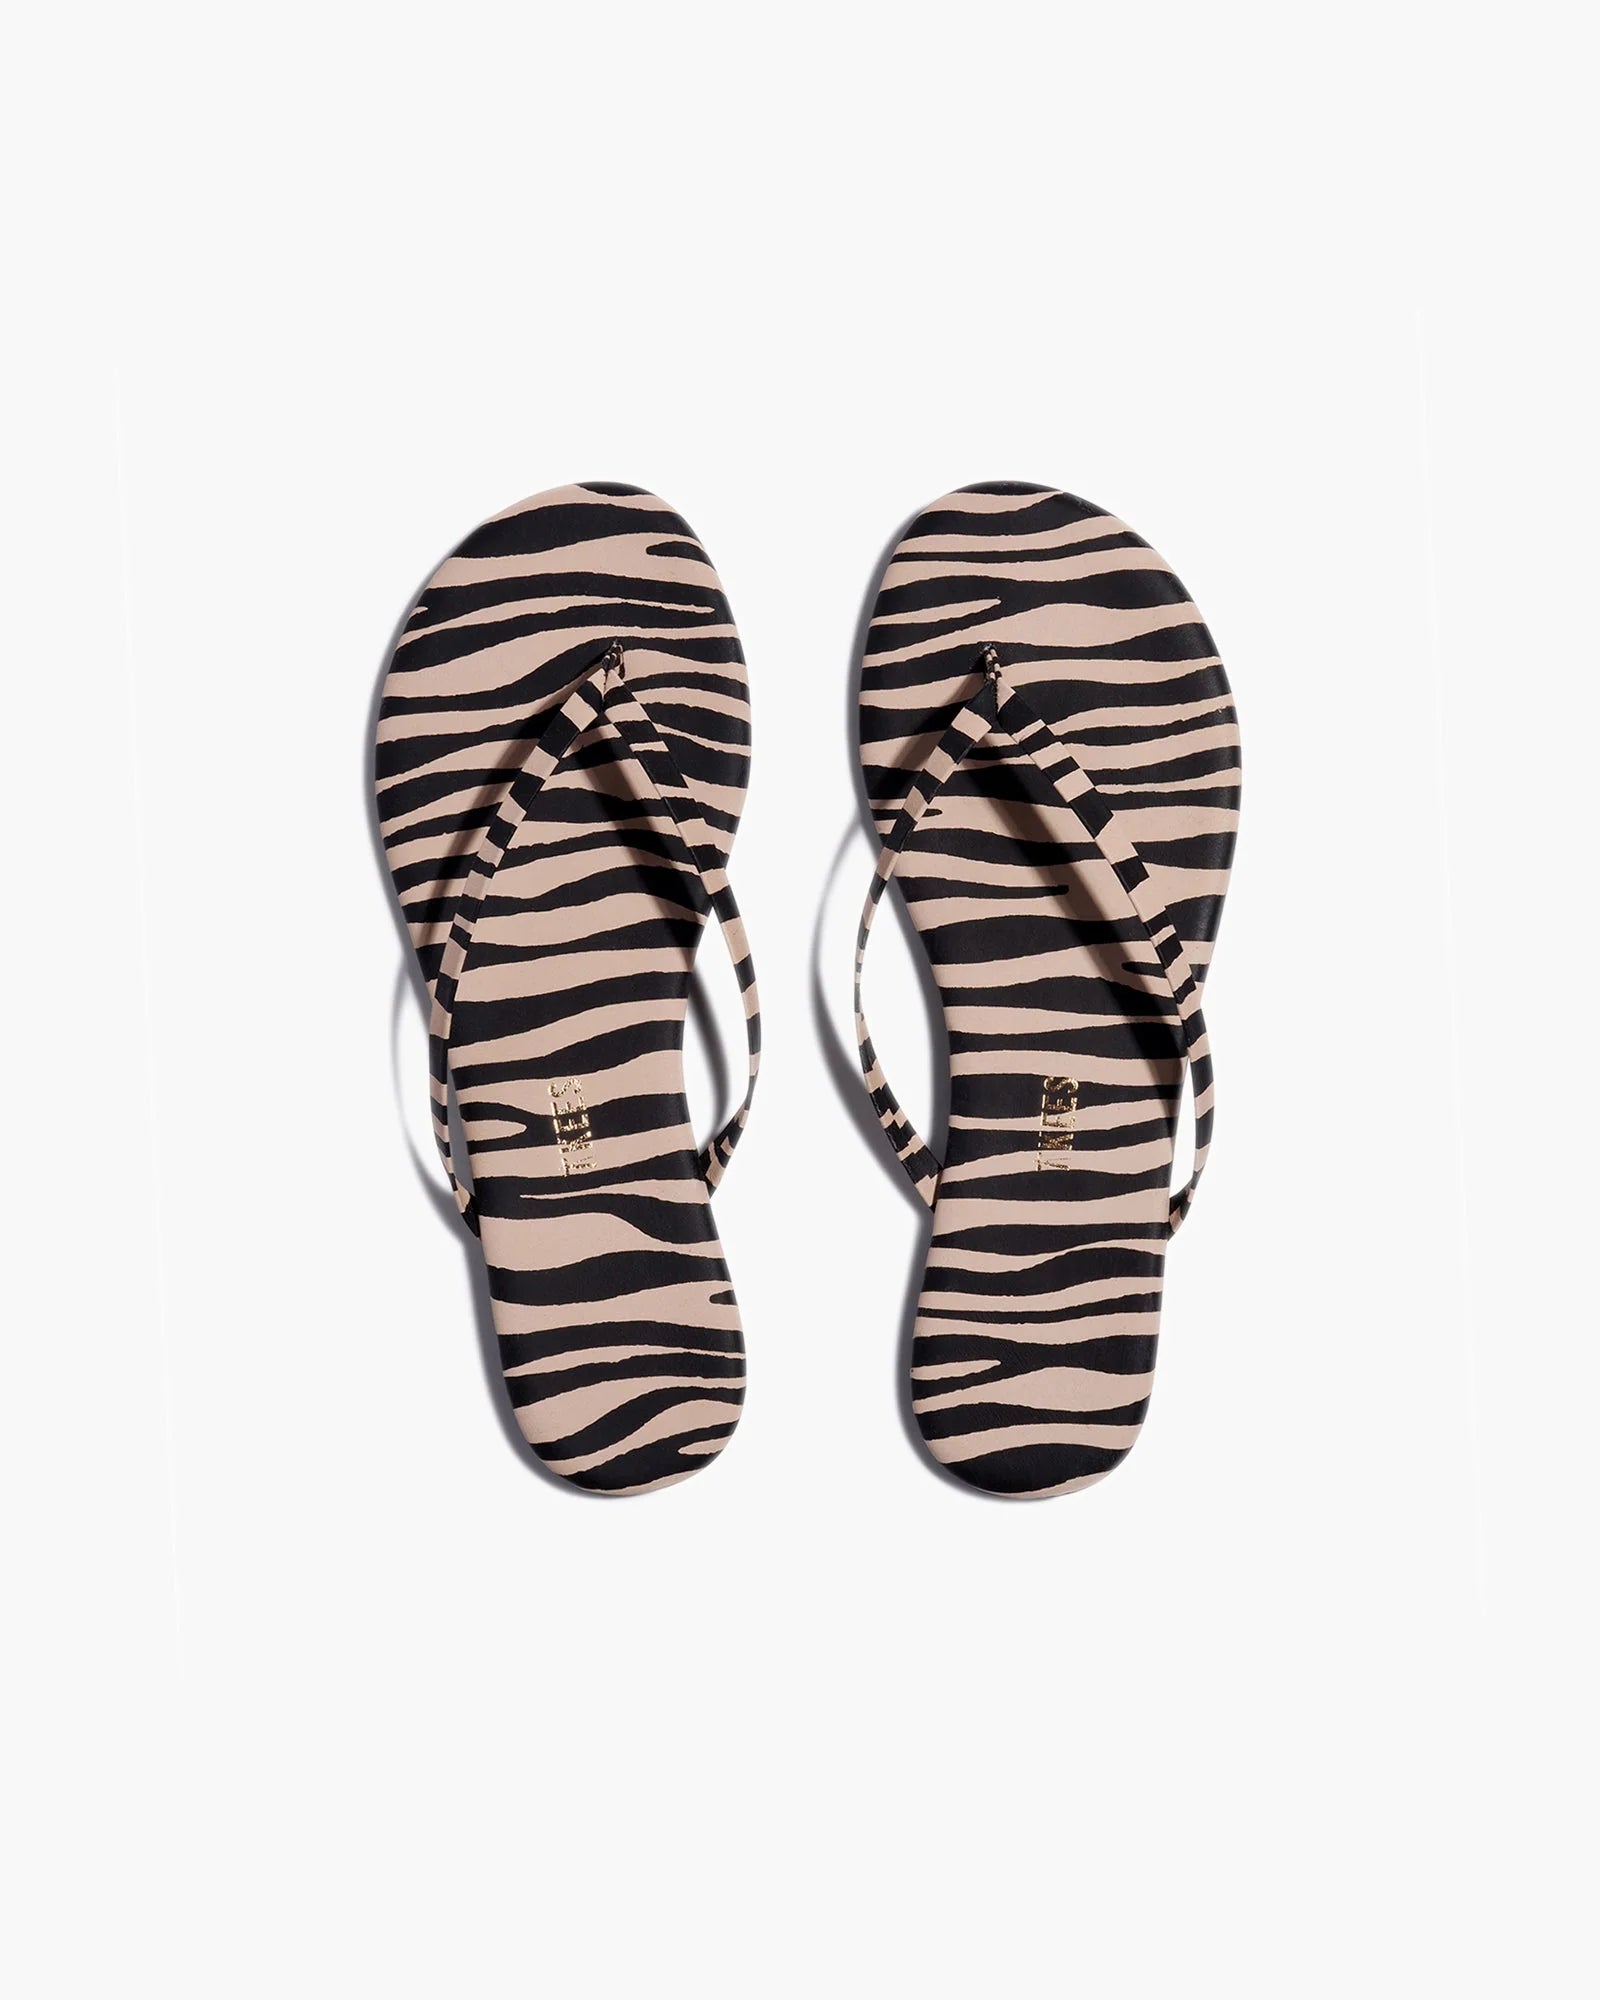 Lily Vegan Sandals - Zebra